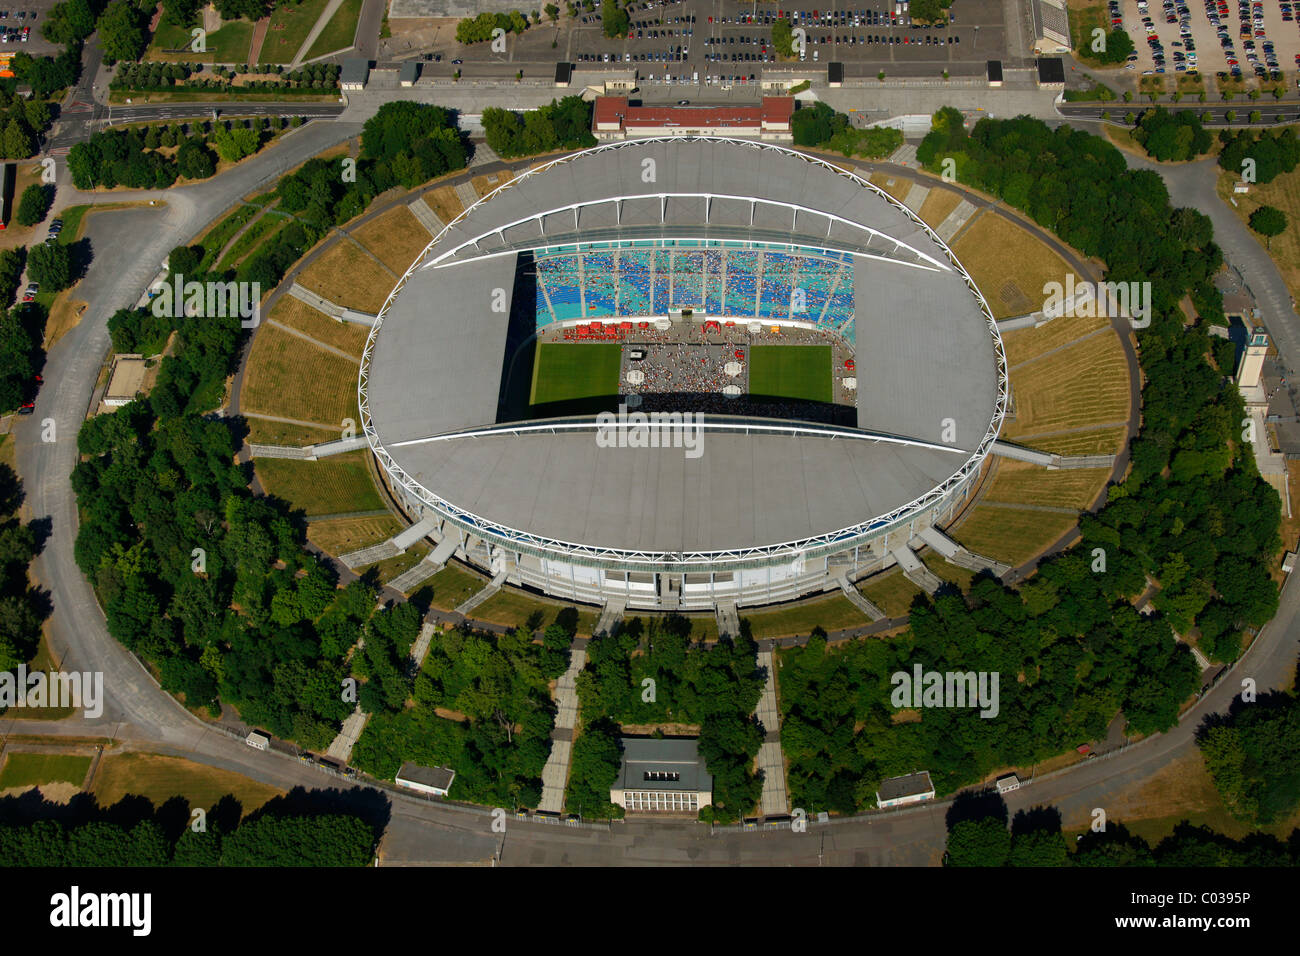 Aerial view, Zentralstadion stadium, Elsterbecken, public viewing at the stadium, Leipzig, Saxony, Germany, Europe Stock Photo